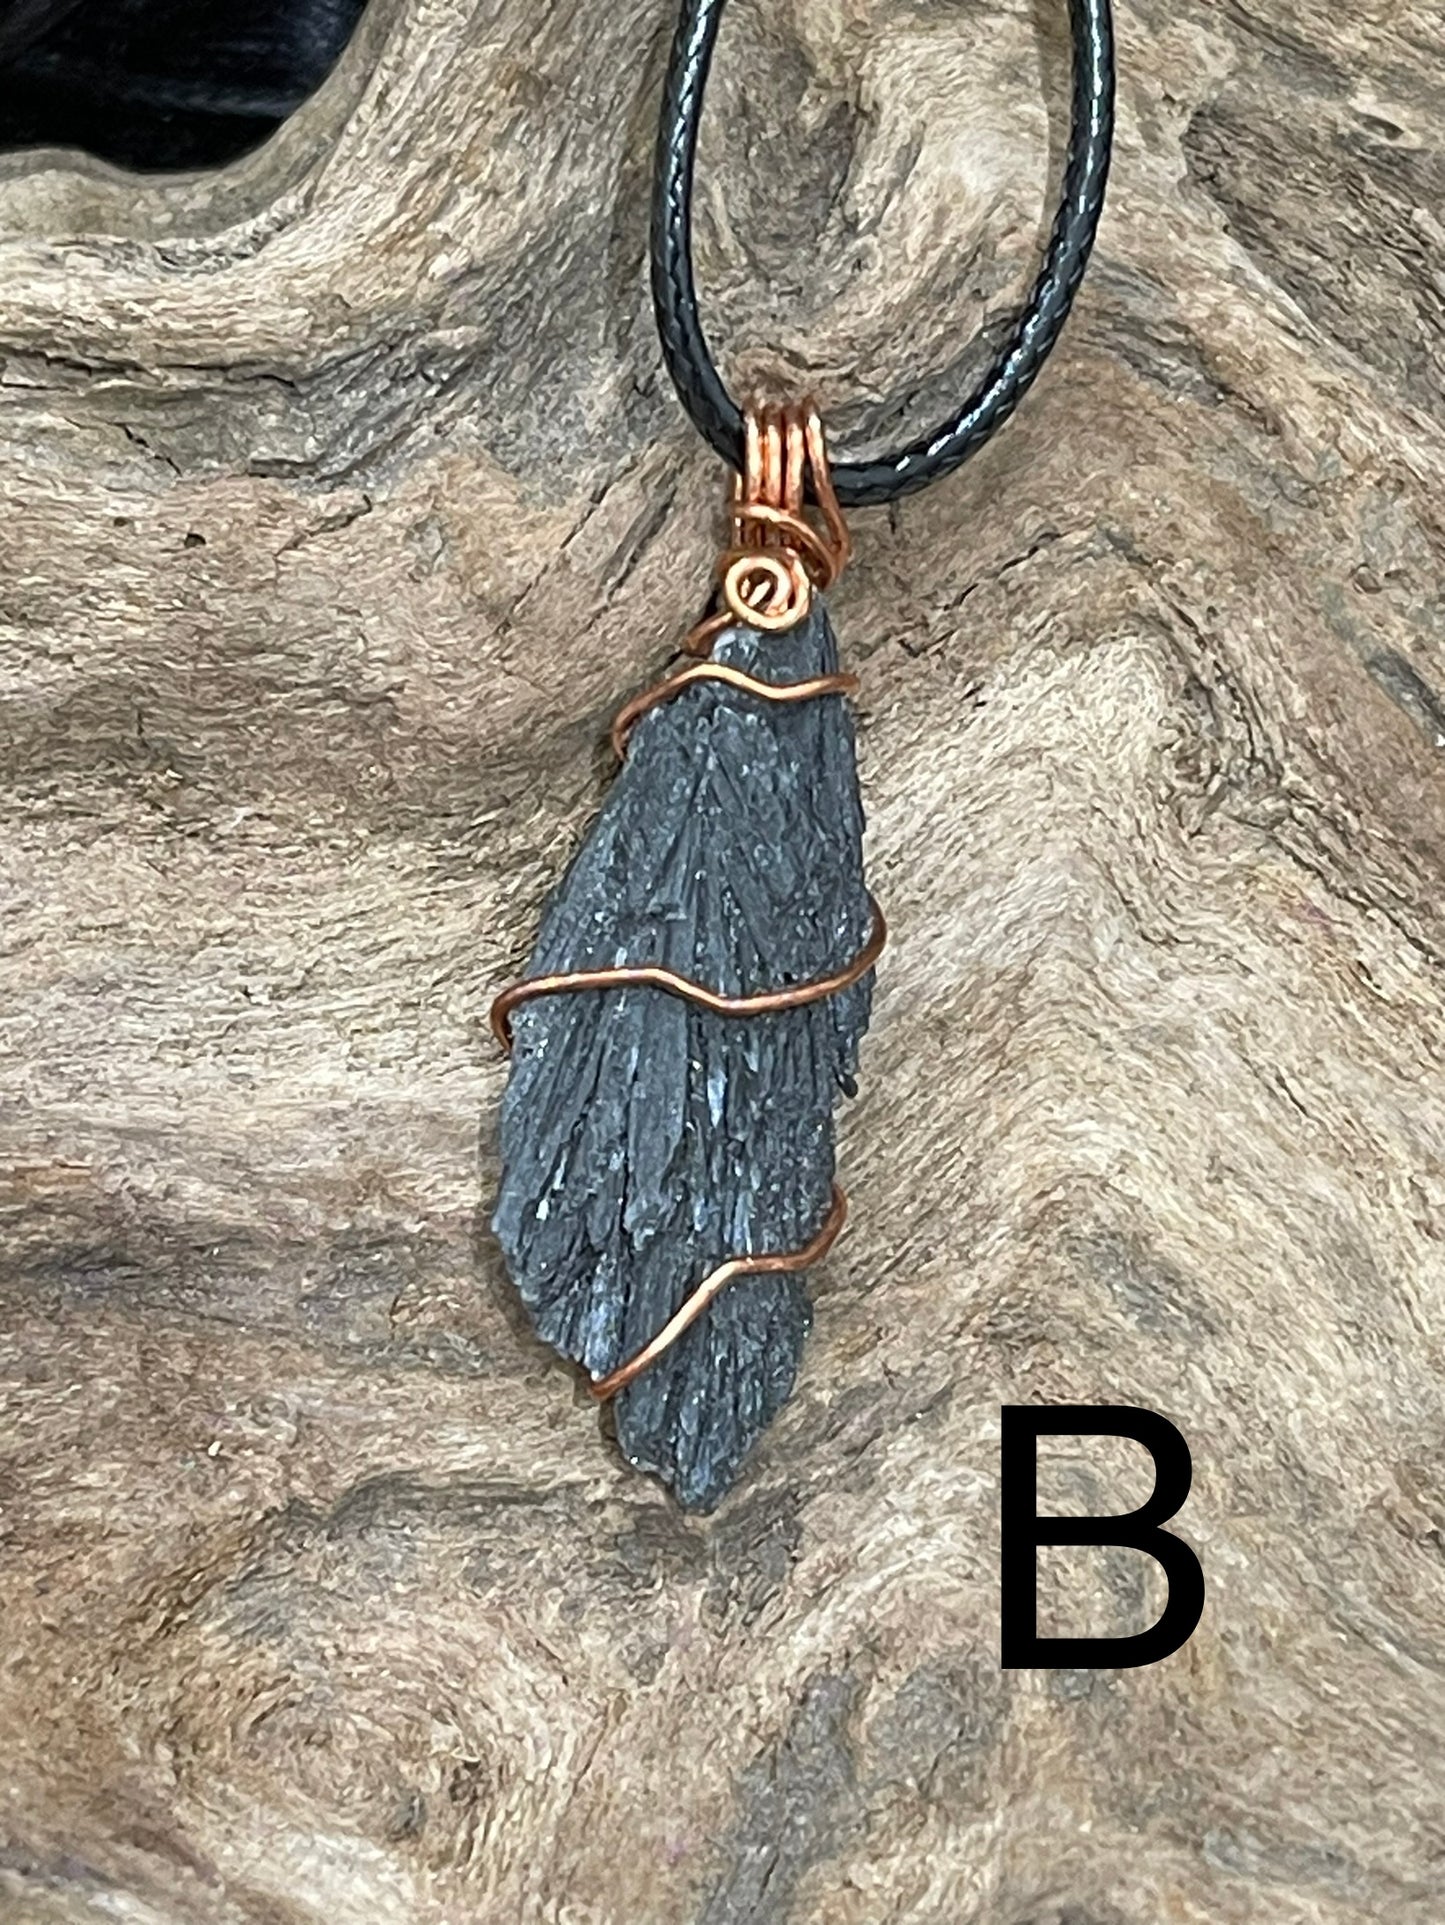 Basic wire wrap pendants - Handmade